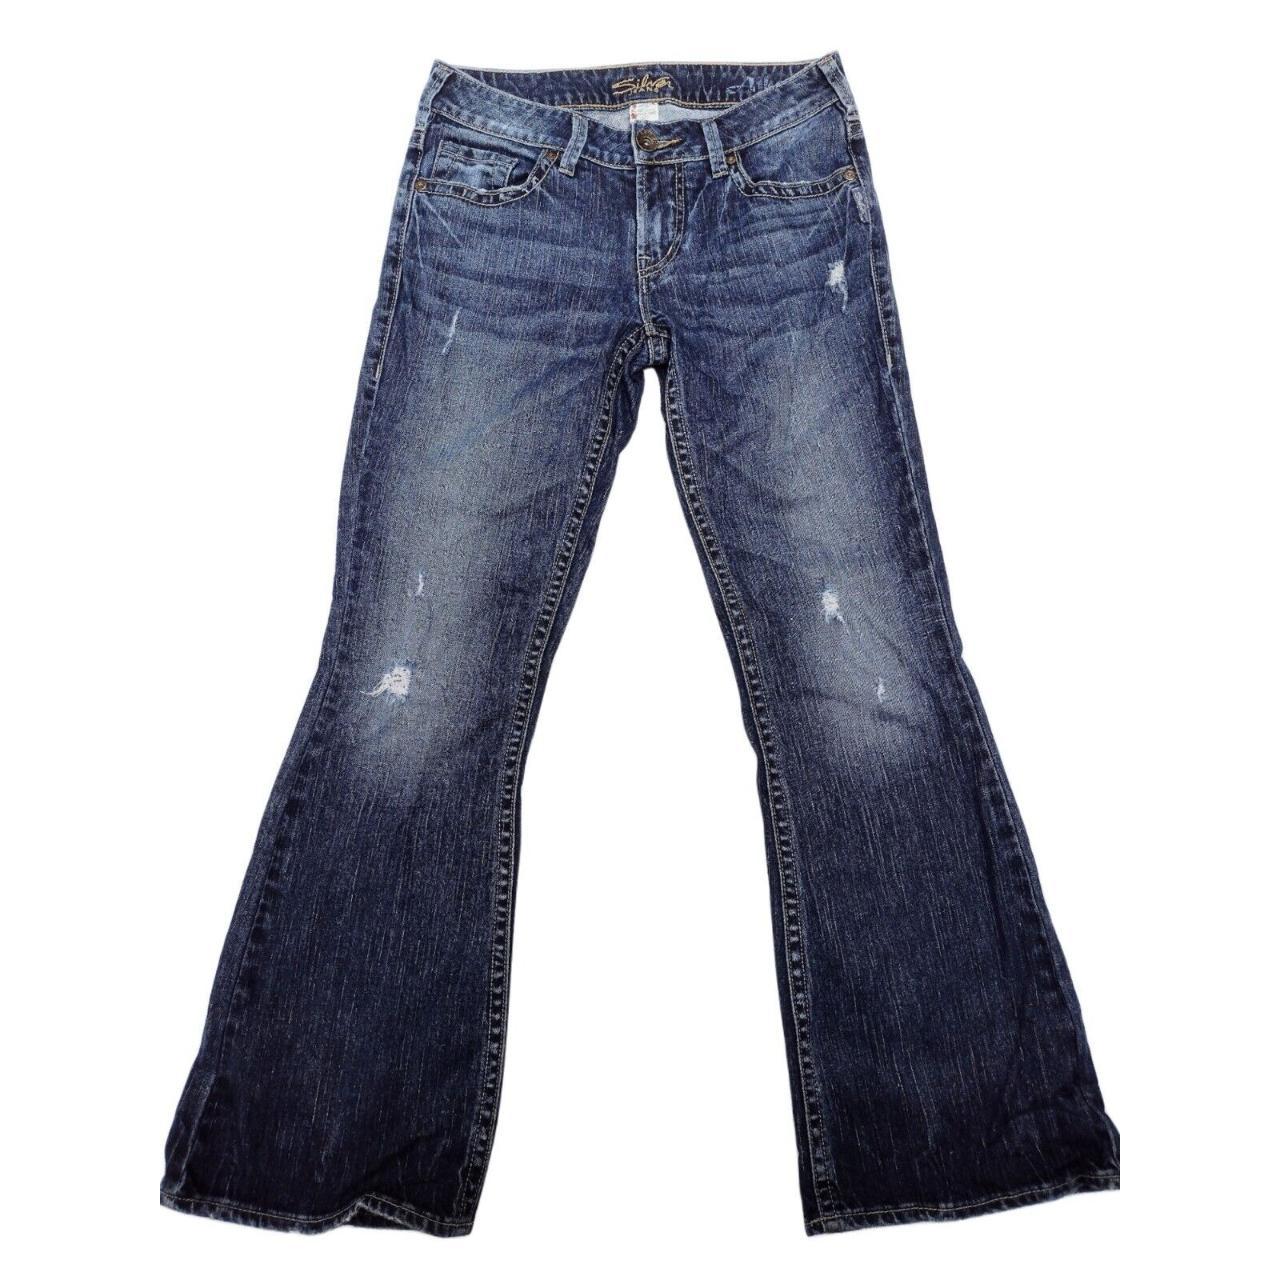 Silver Dark Wash Blue Denim Skinny Boot Cut Jeans... - Depop